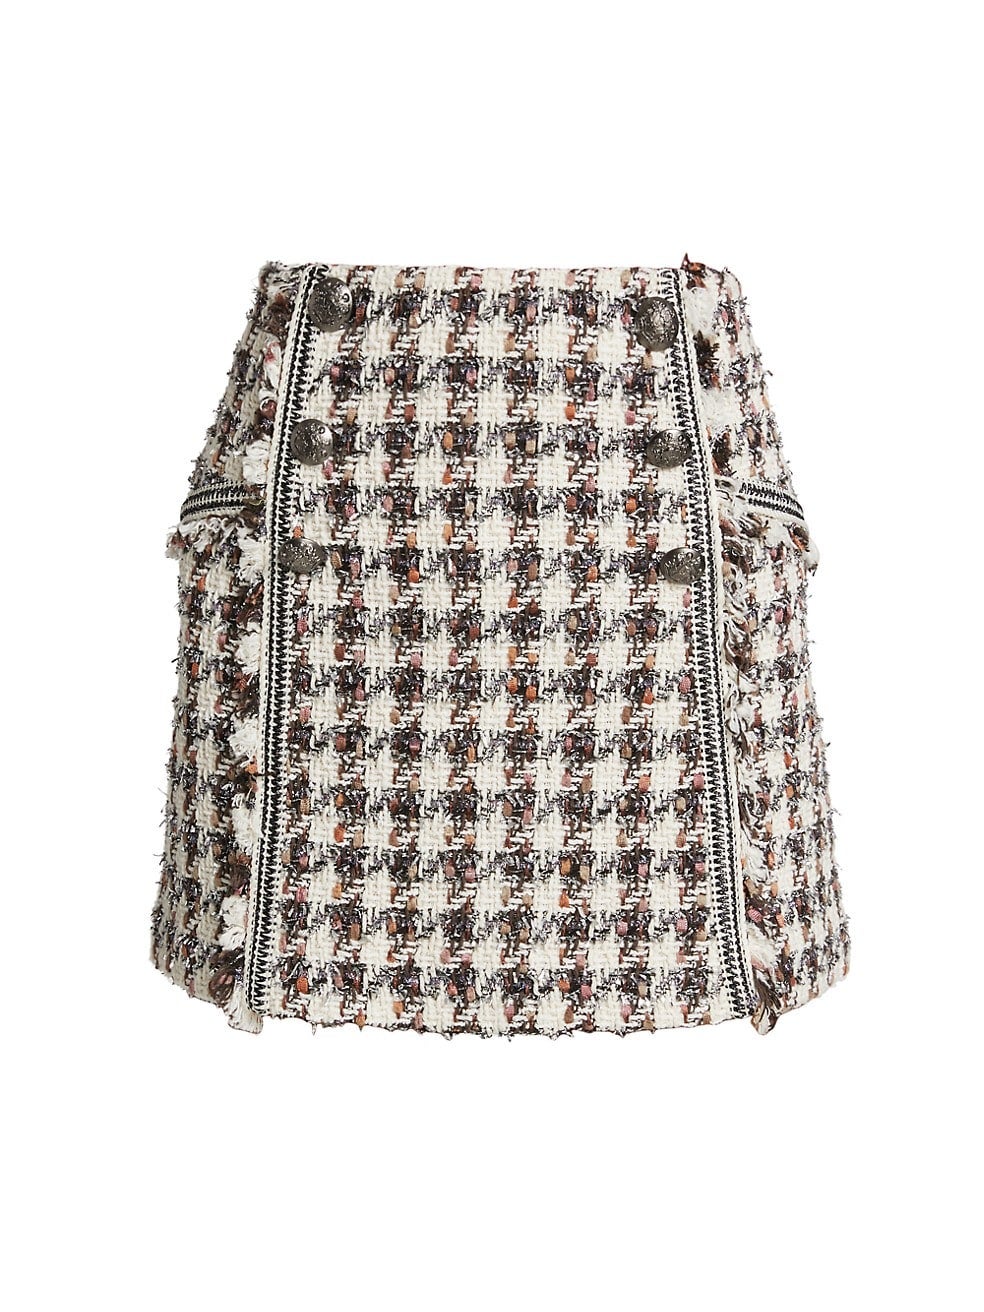 Veronica Beard + Starck Tweed Mini Skirt